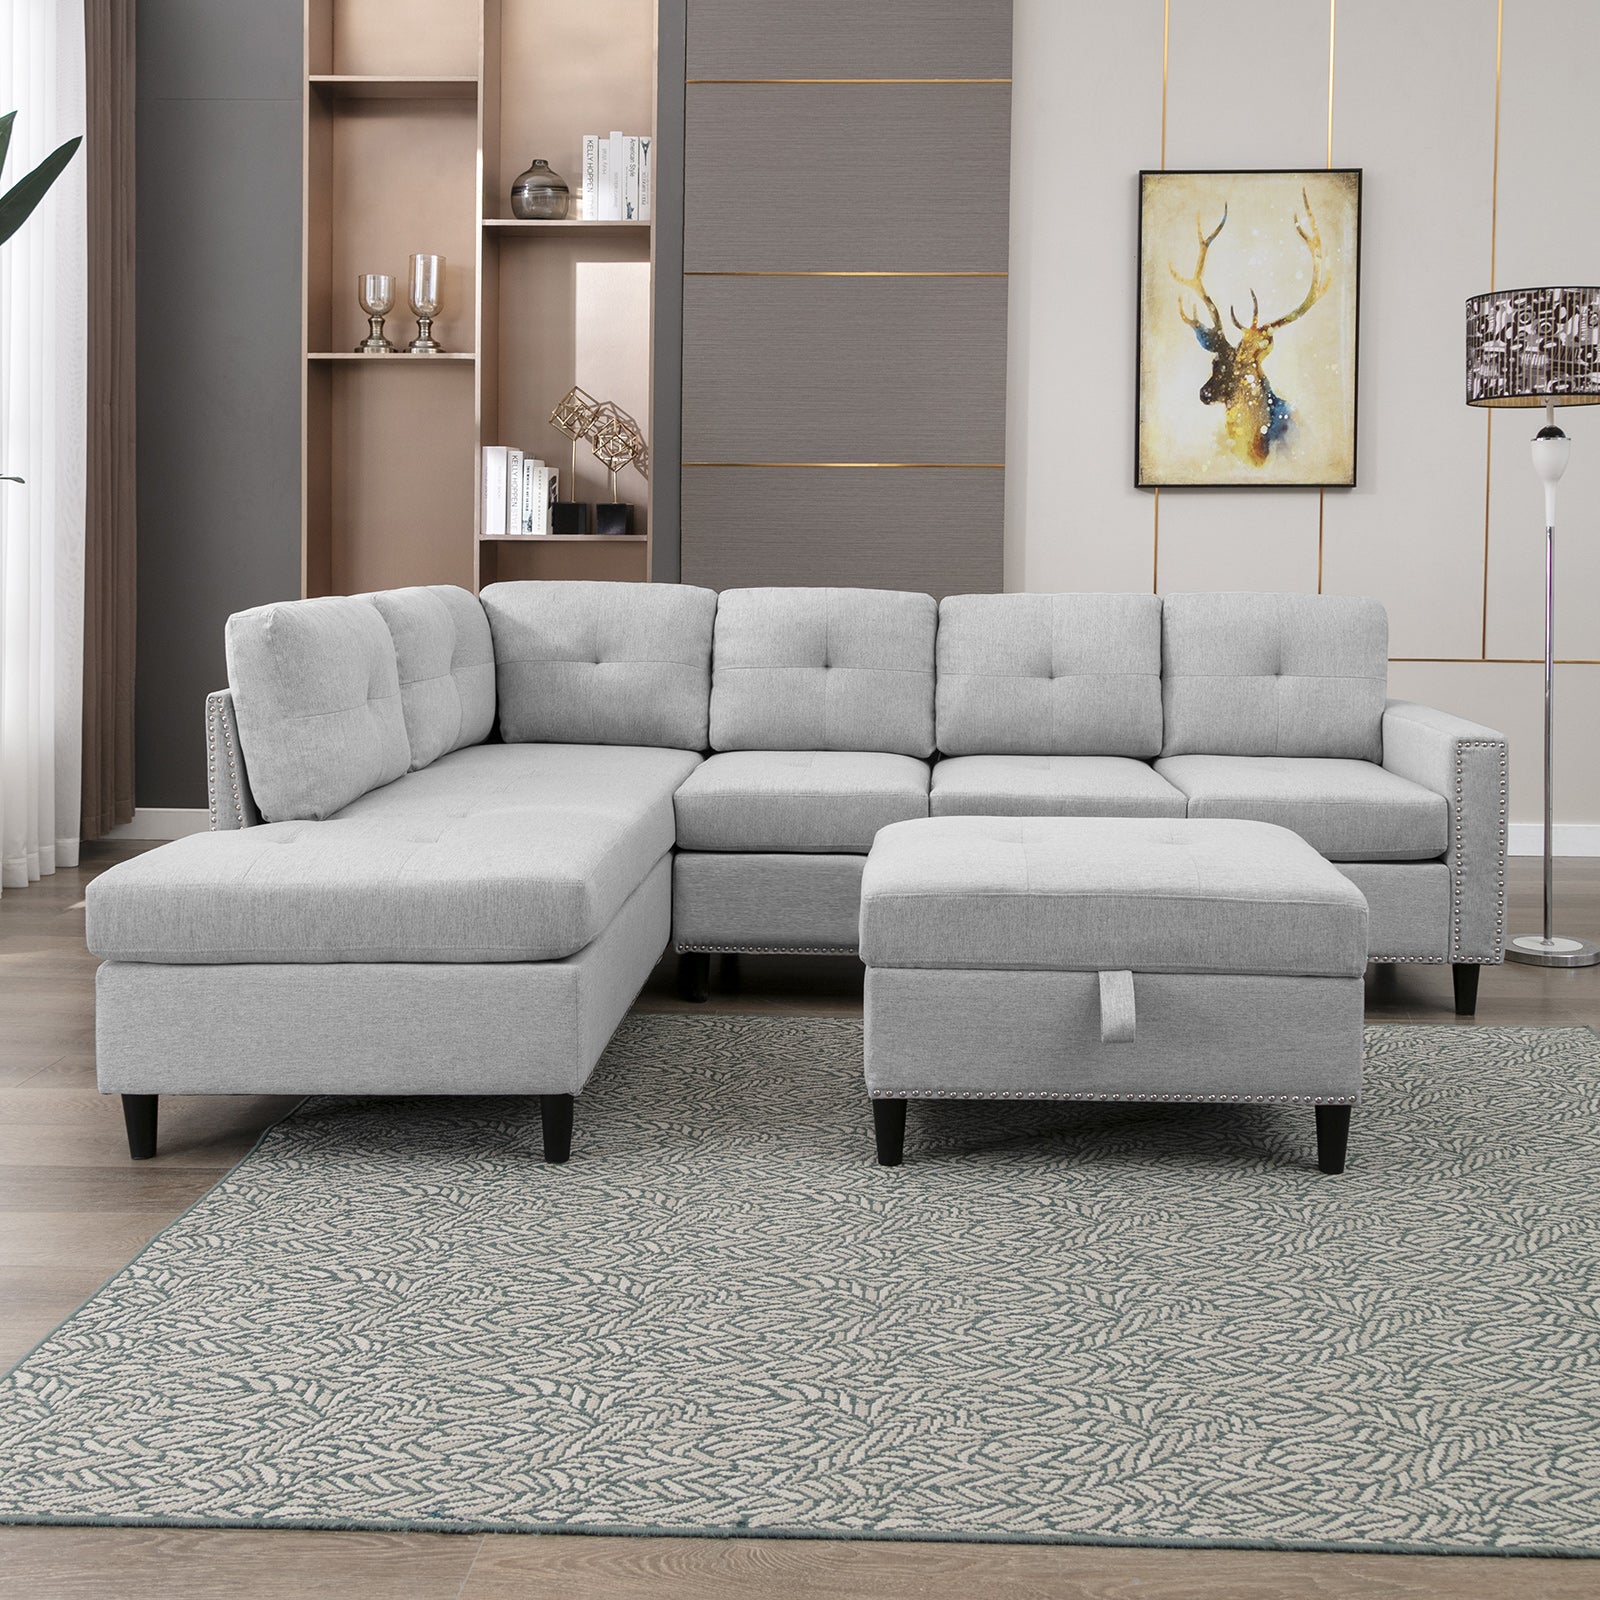 Mjkone Modern Upholstered Sectional Sofa with Ottoman